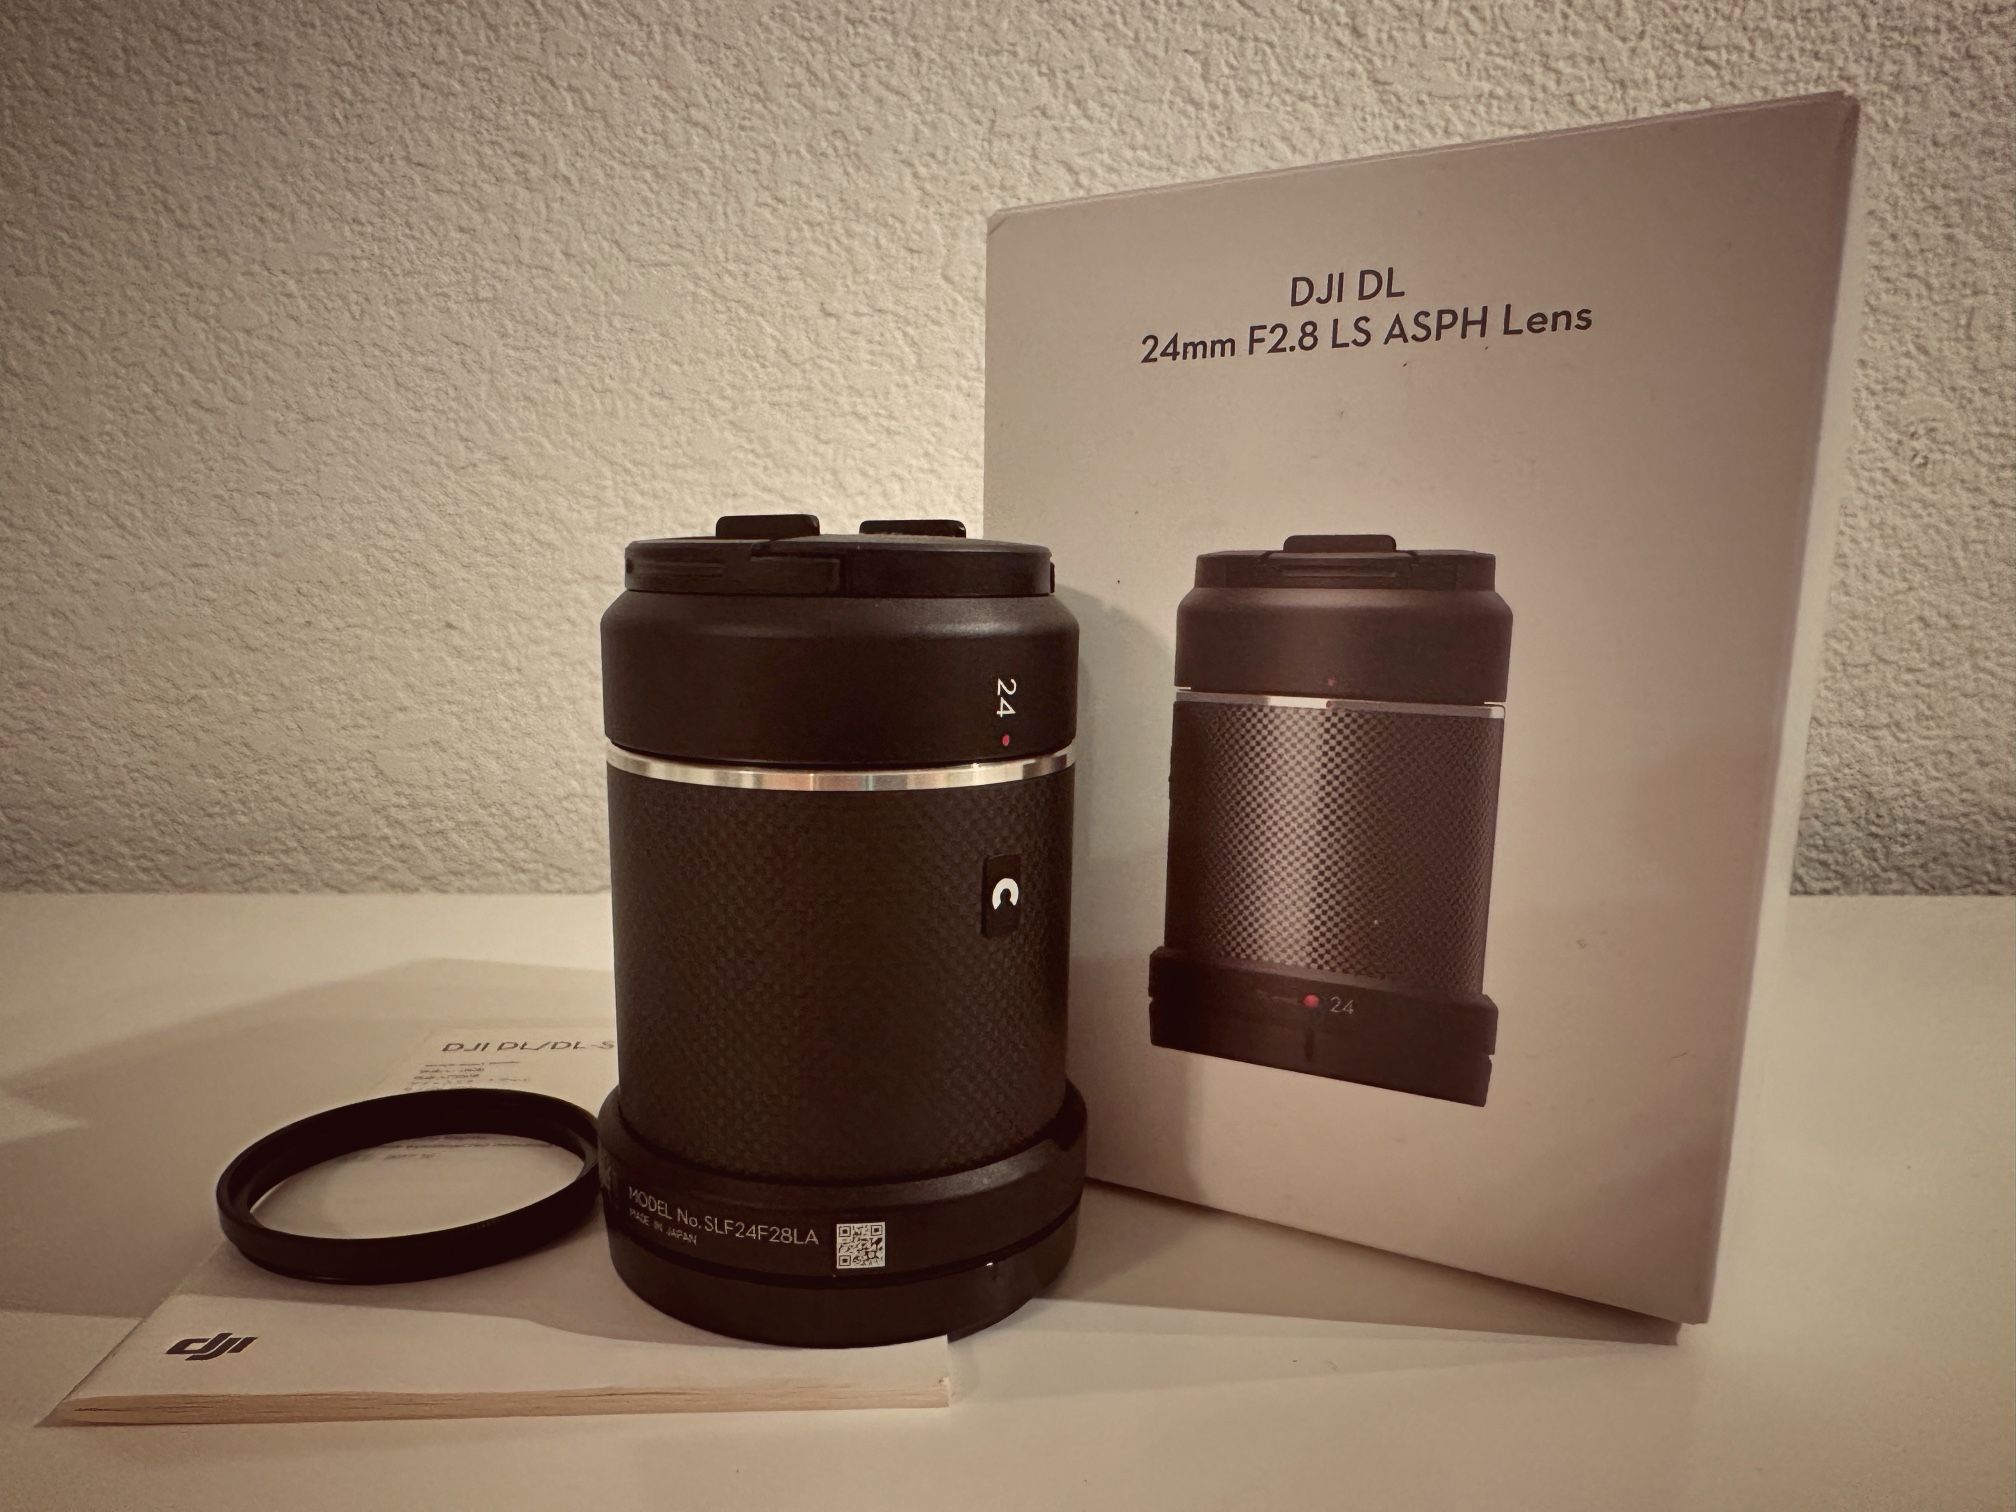 DJI DL 24mm 2.8 LS ASPH Lens